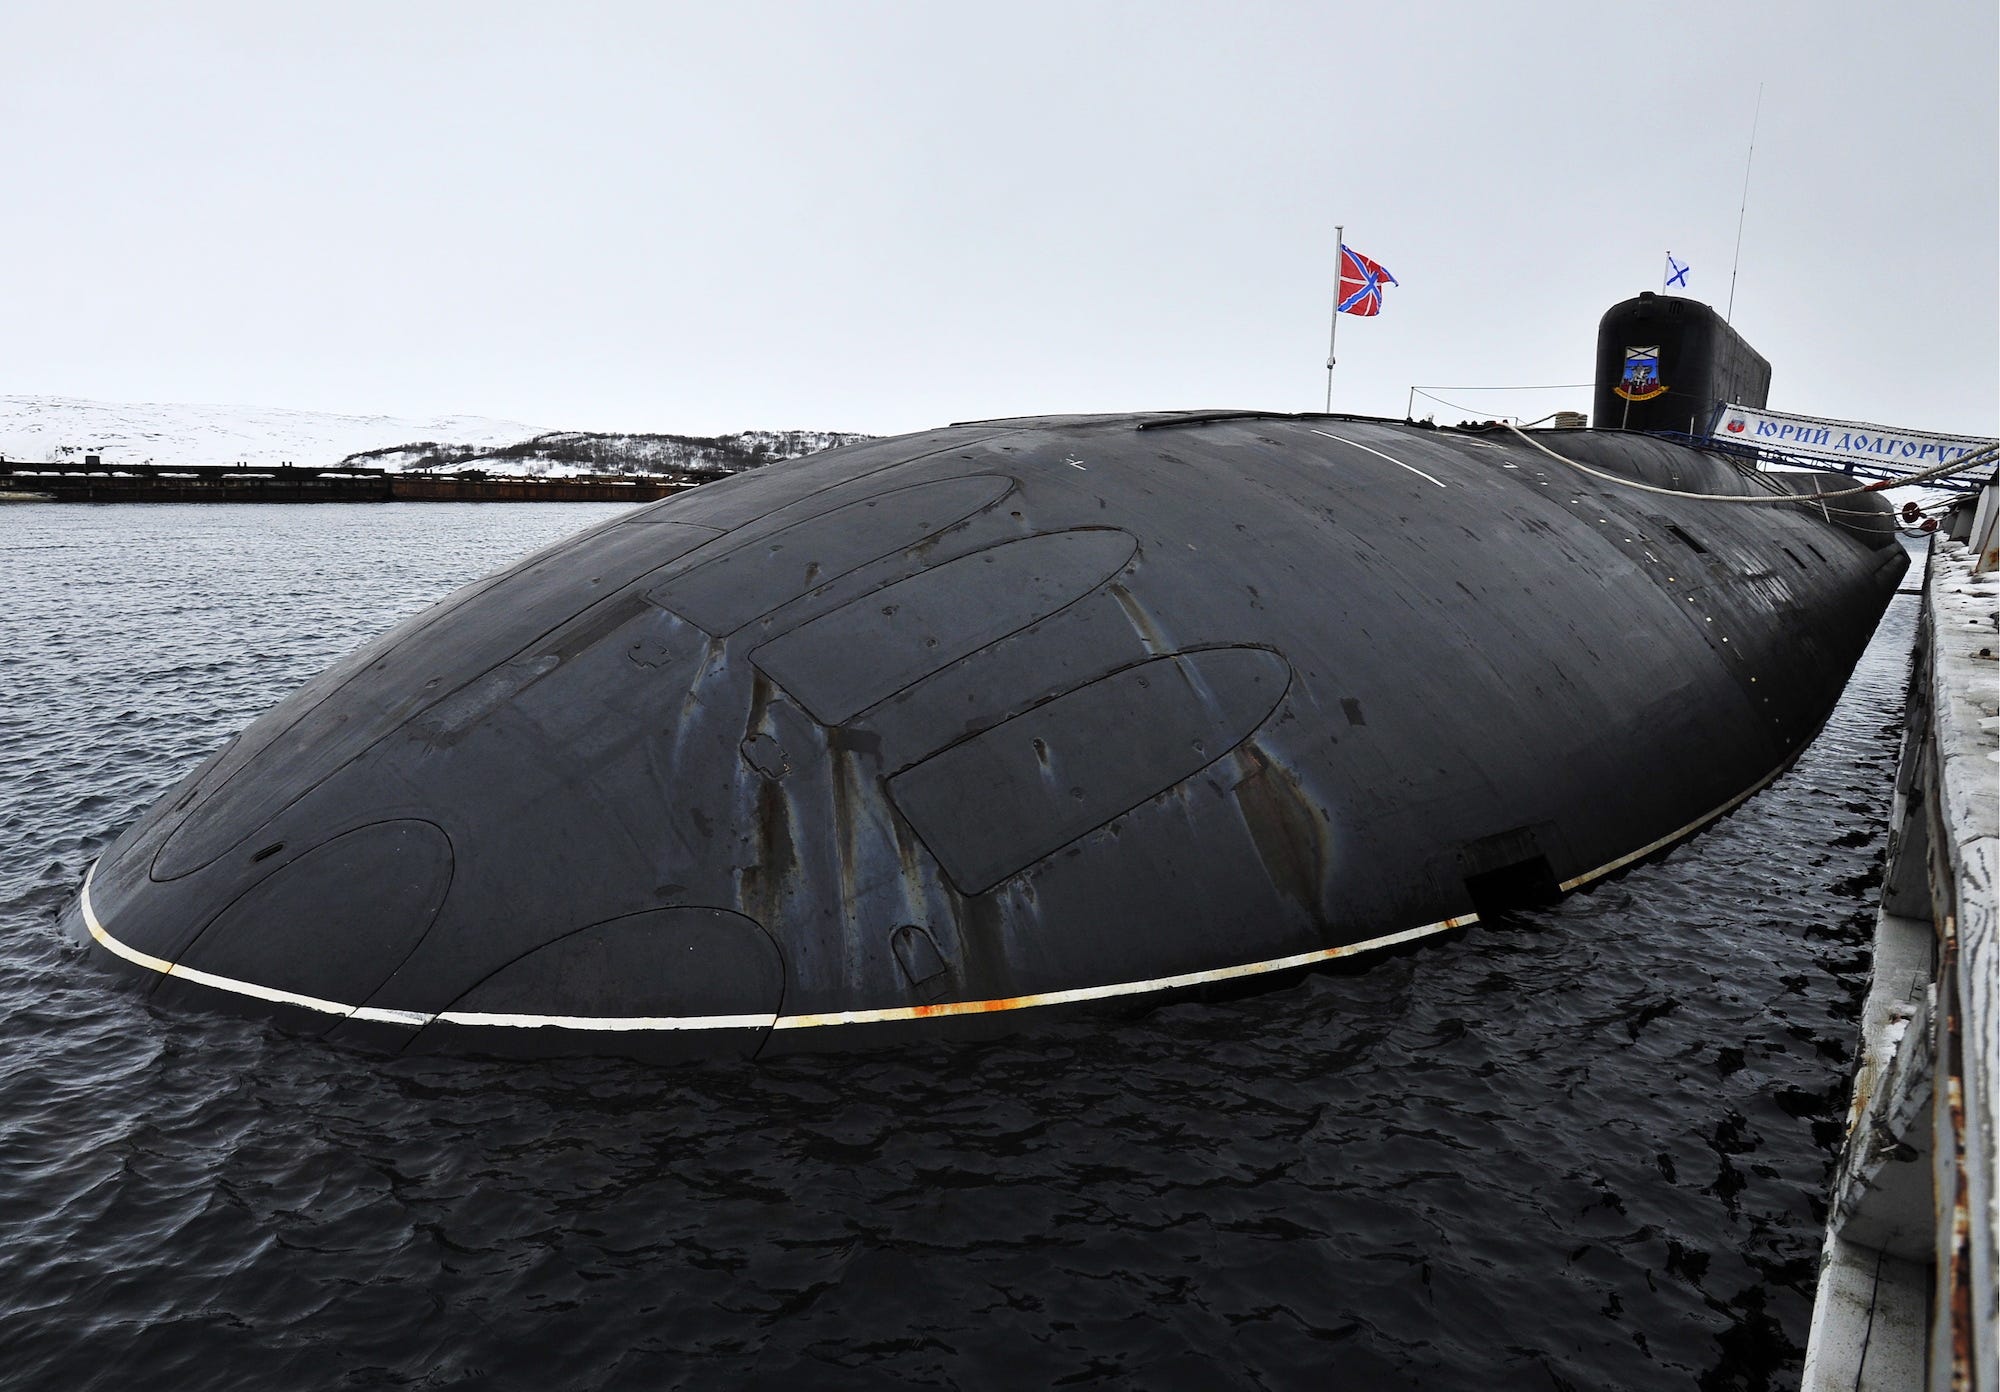 Russia Borei ballistic missile submarine Yury Dolgoruky